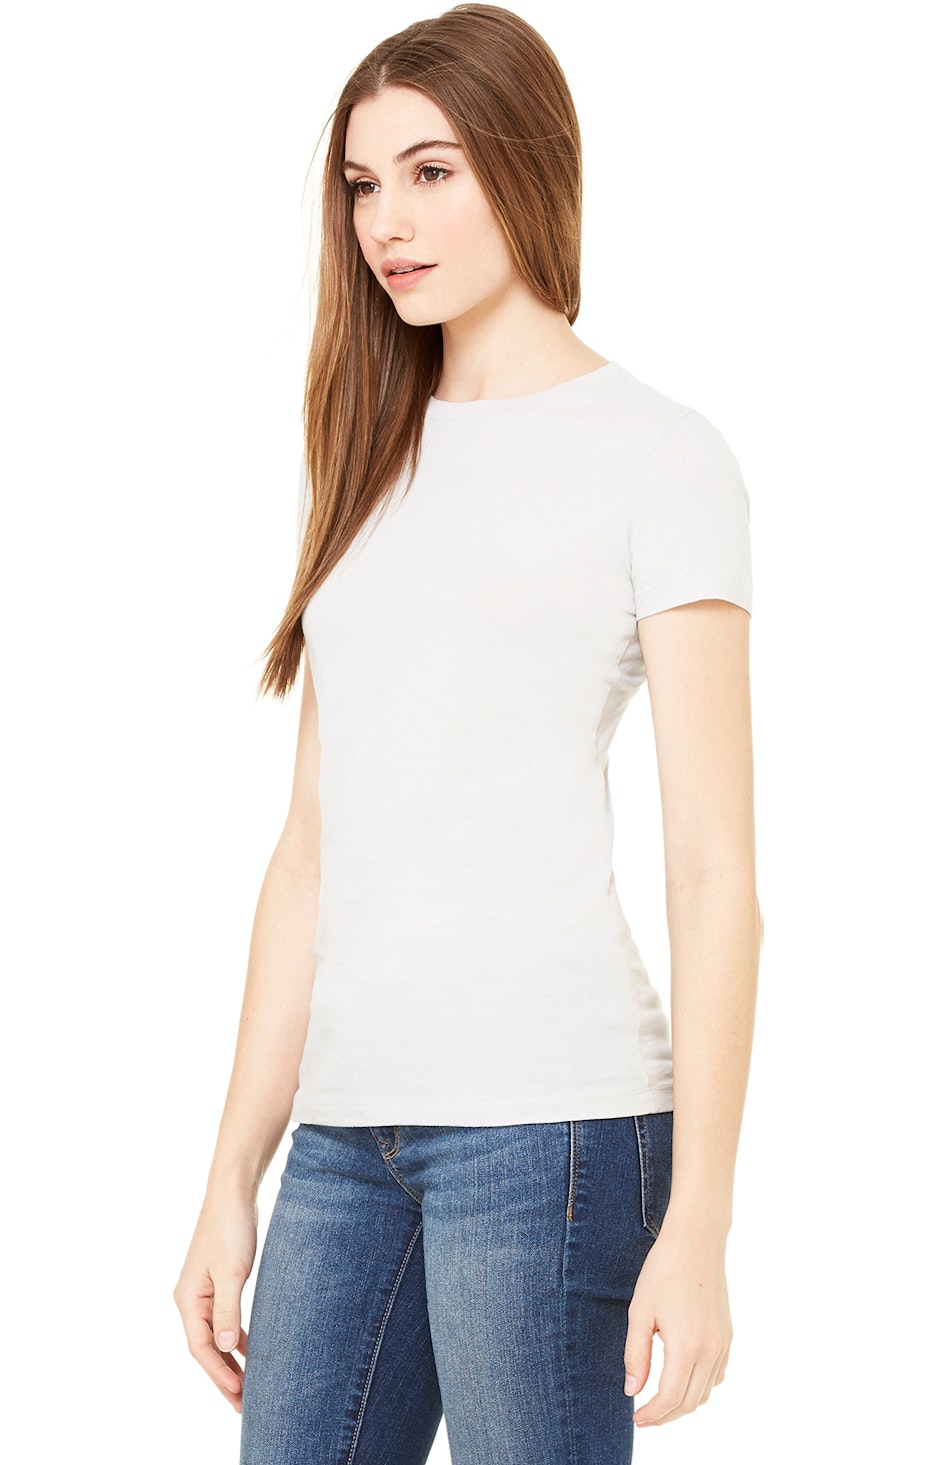 Bella Canvas 6004 Ladies' Junior Fit Favorite T Shirt | Jiffy Shirts